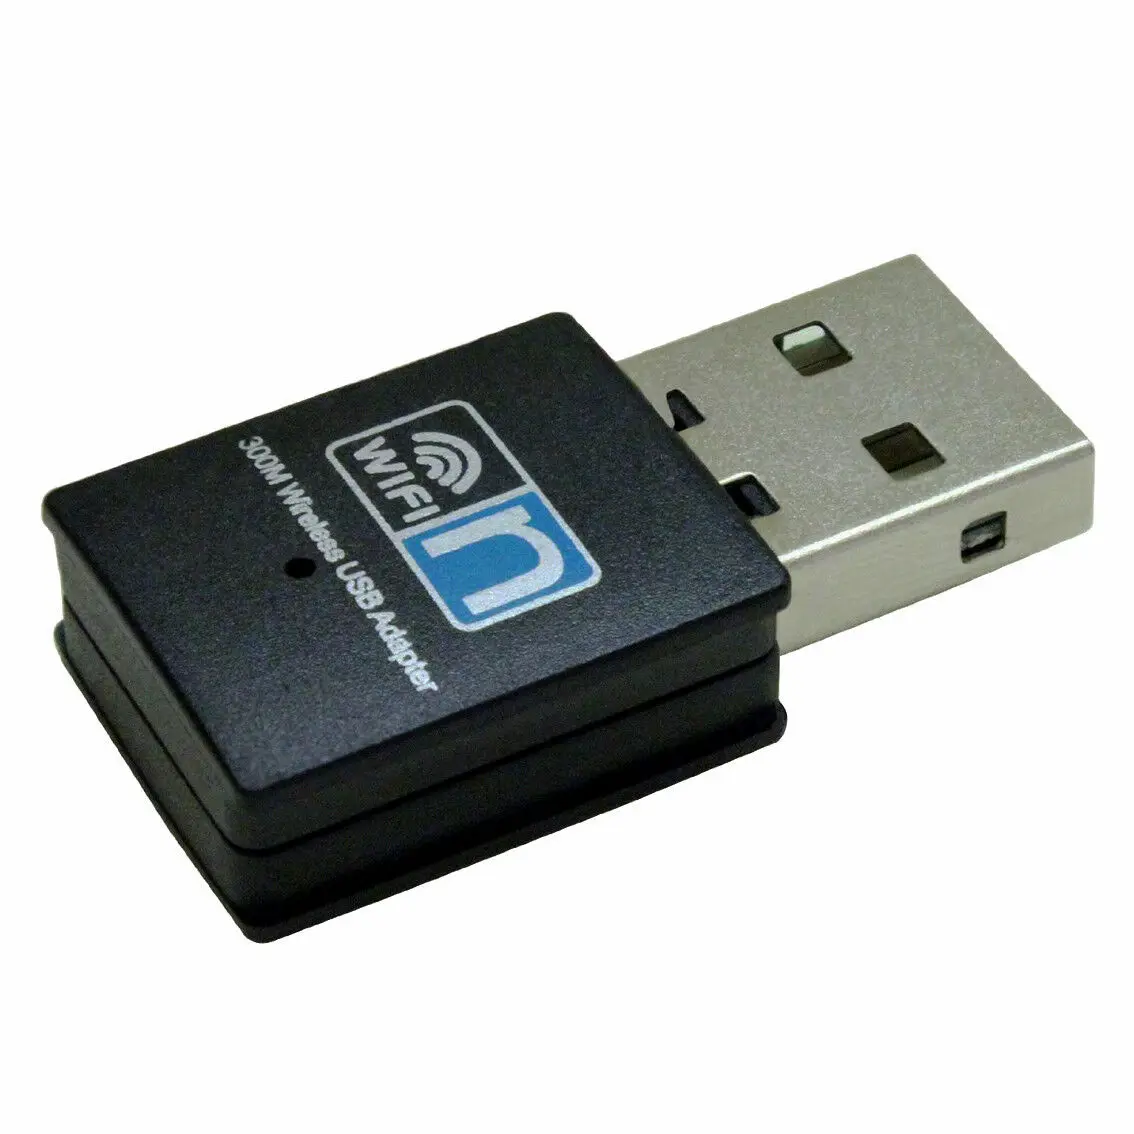 Wireless 11n USB Adapter. WIFI адаптер Wireless lan USB 802.11 N. USB Wireless 802.11 b/g Adaptor. Wireless 802:11n USB Adapter Driver. Драйверов usb адаптера wireless